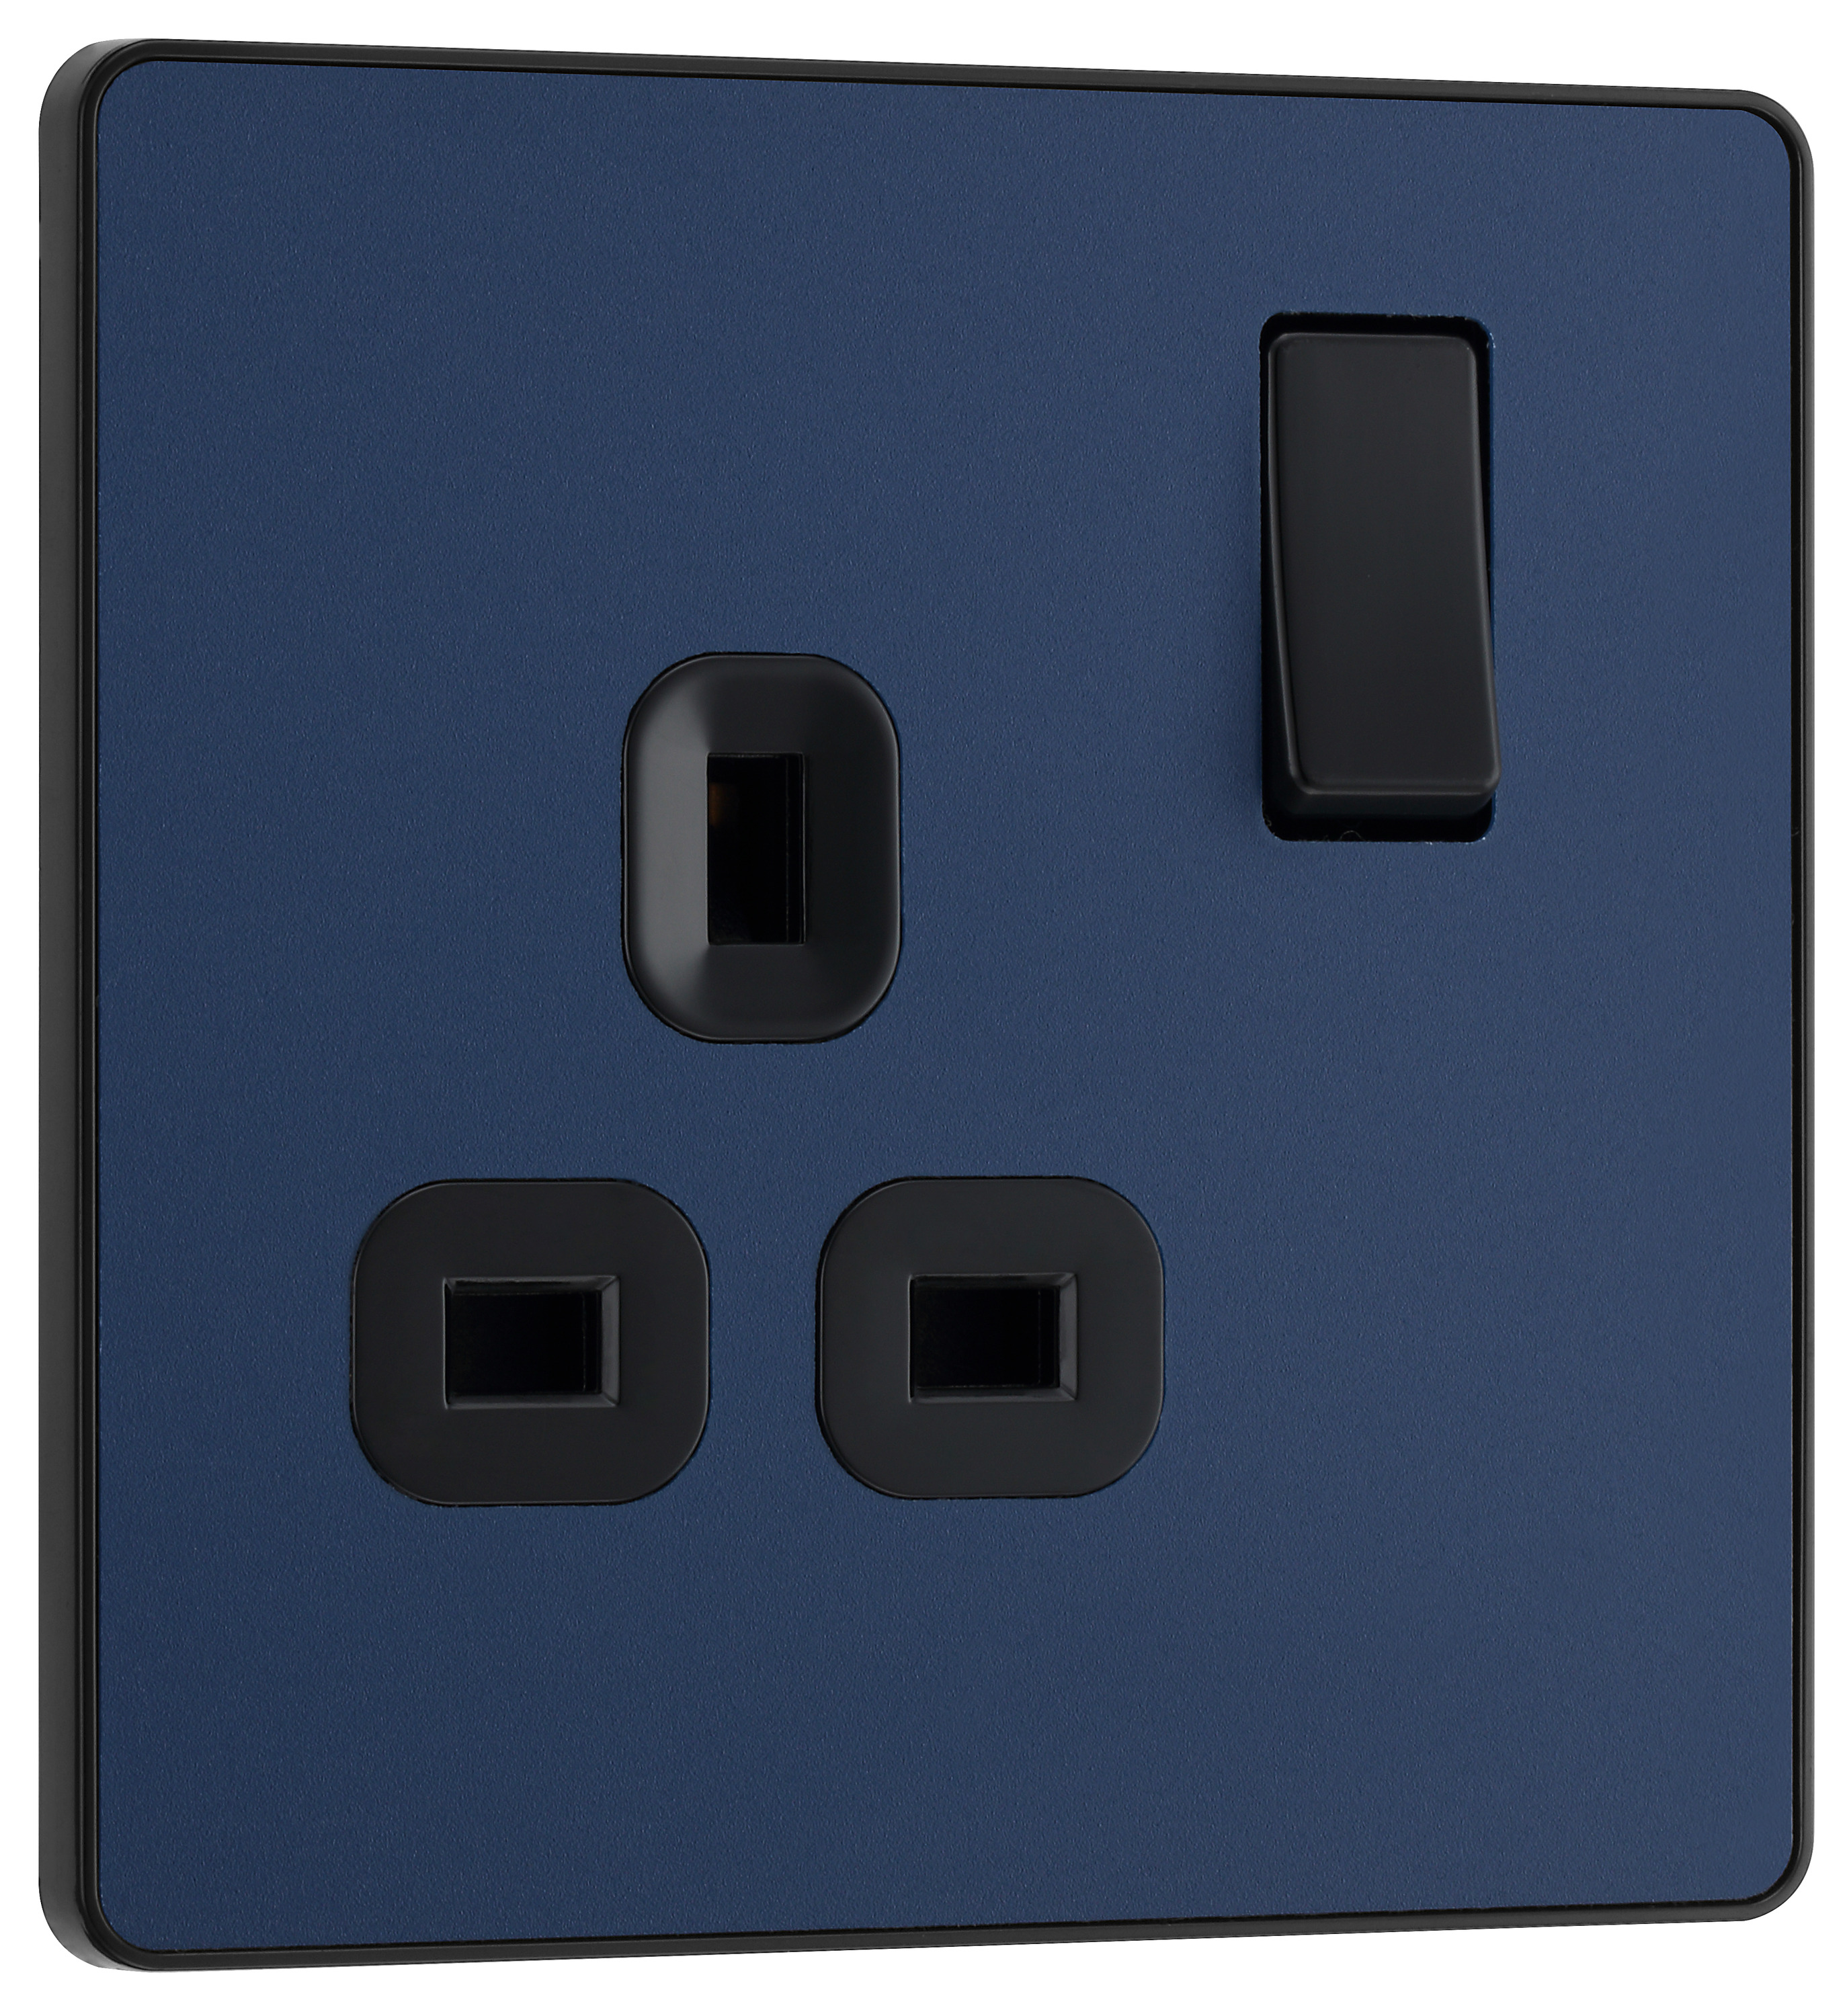 Image of BG Evolve Matt Blue 13A Single Switched Power Socket